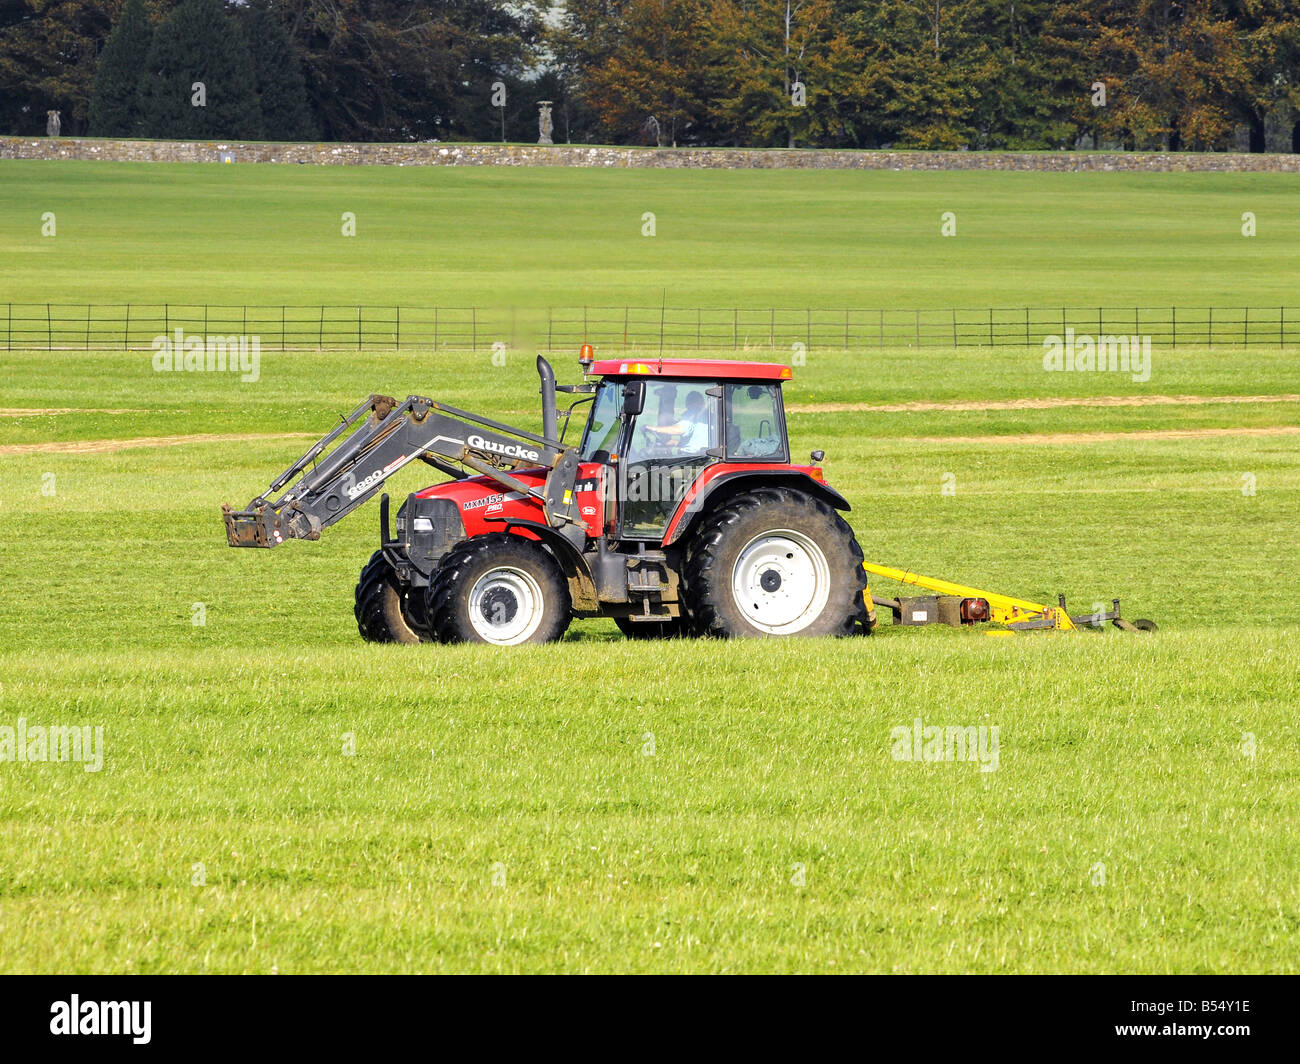 https://c8.alamy.com/compde/b54y1e/red-farm-traktor-abschleppen-eine-grosse-mahwerk-b54y1e.jpg